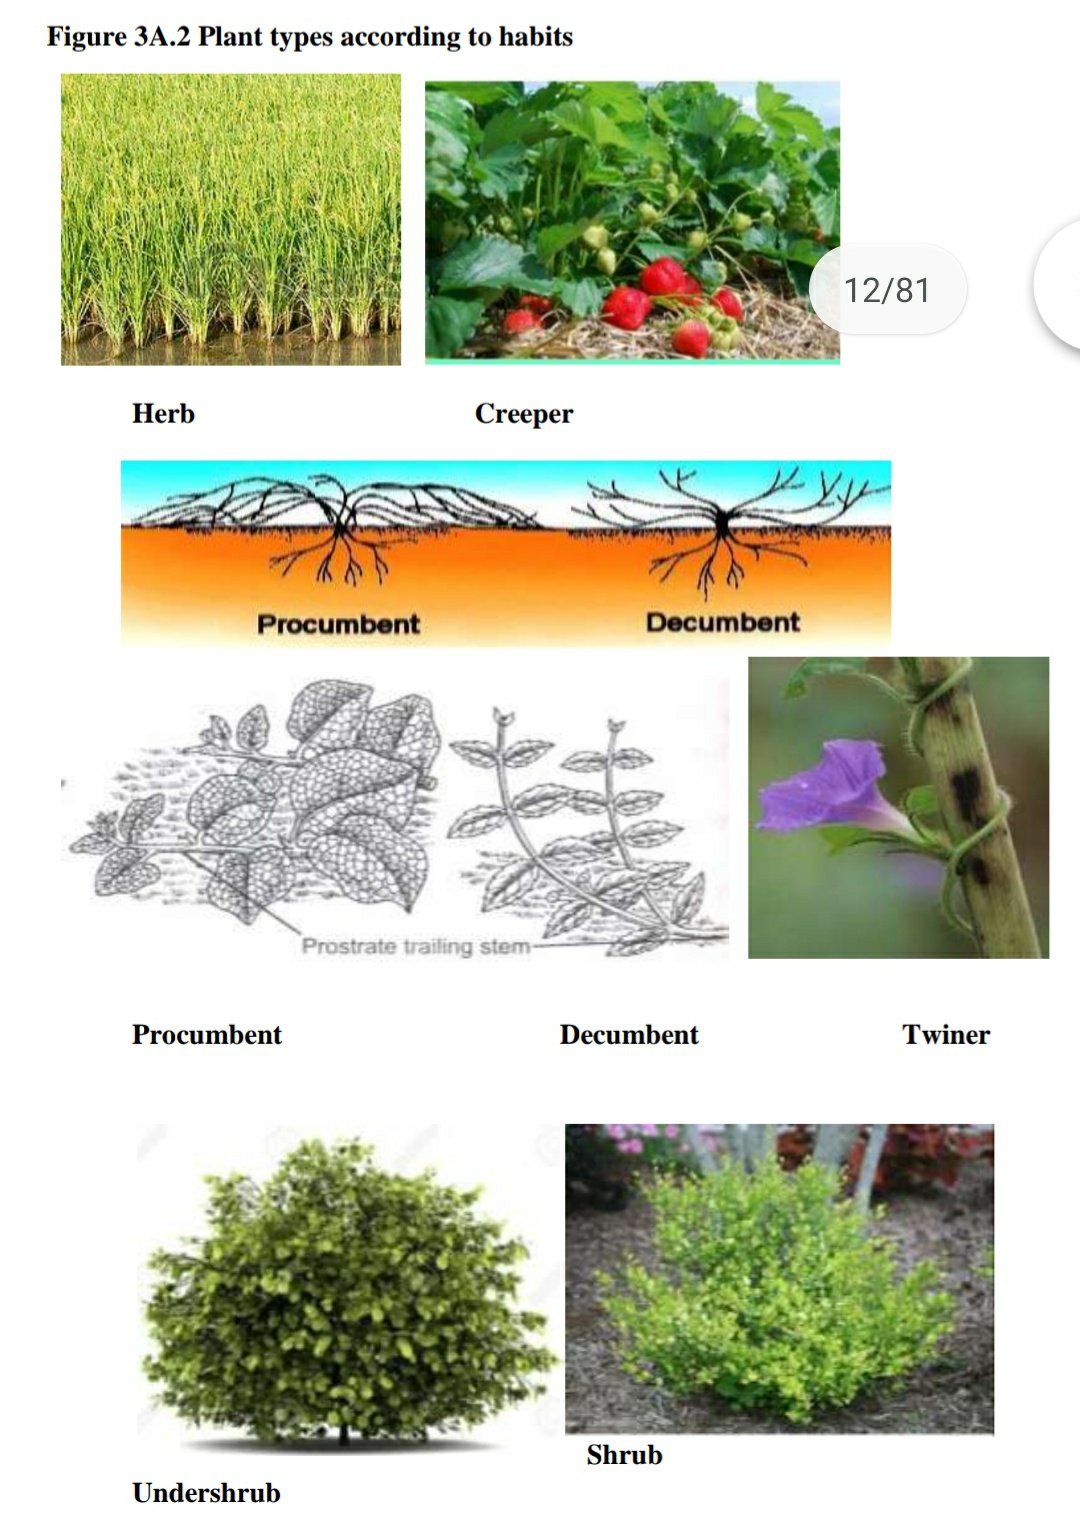 Plant types according to habits

Herb Creeper
Procumbent Decumbent Twiner

Shrub 
Undershrub